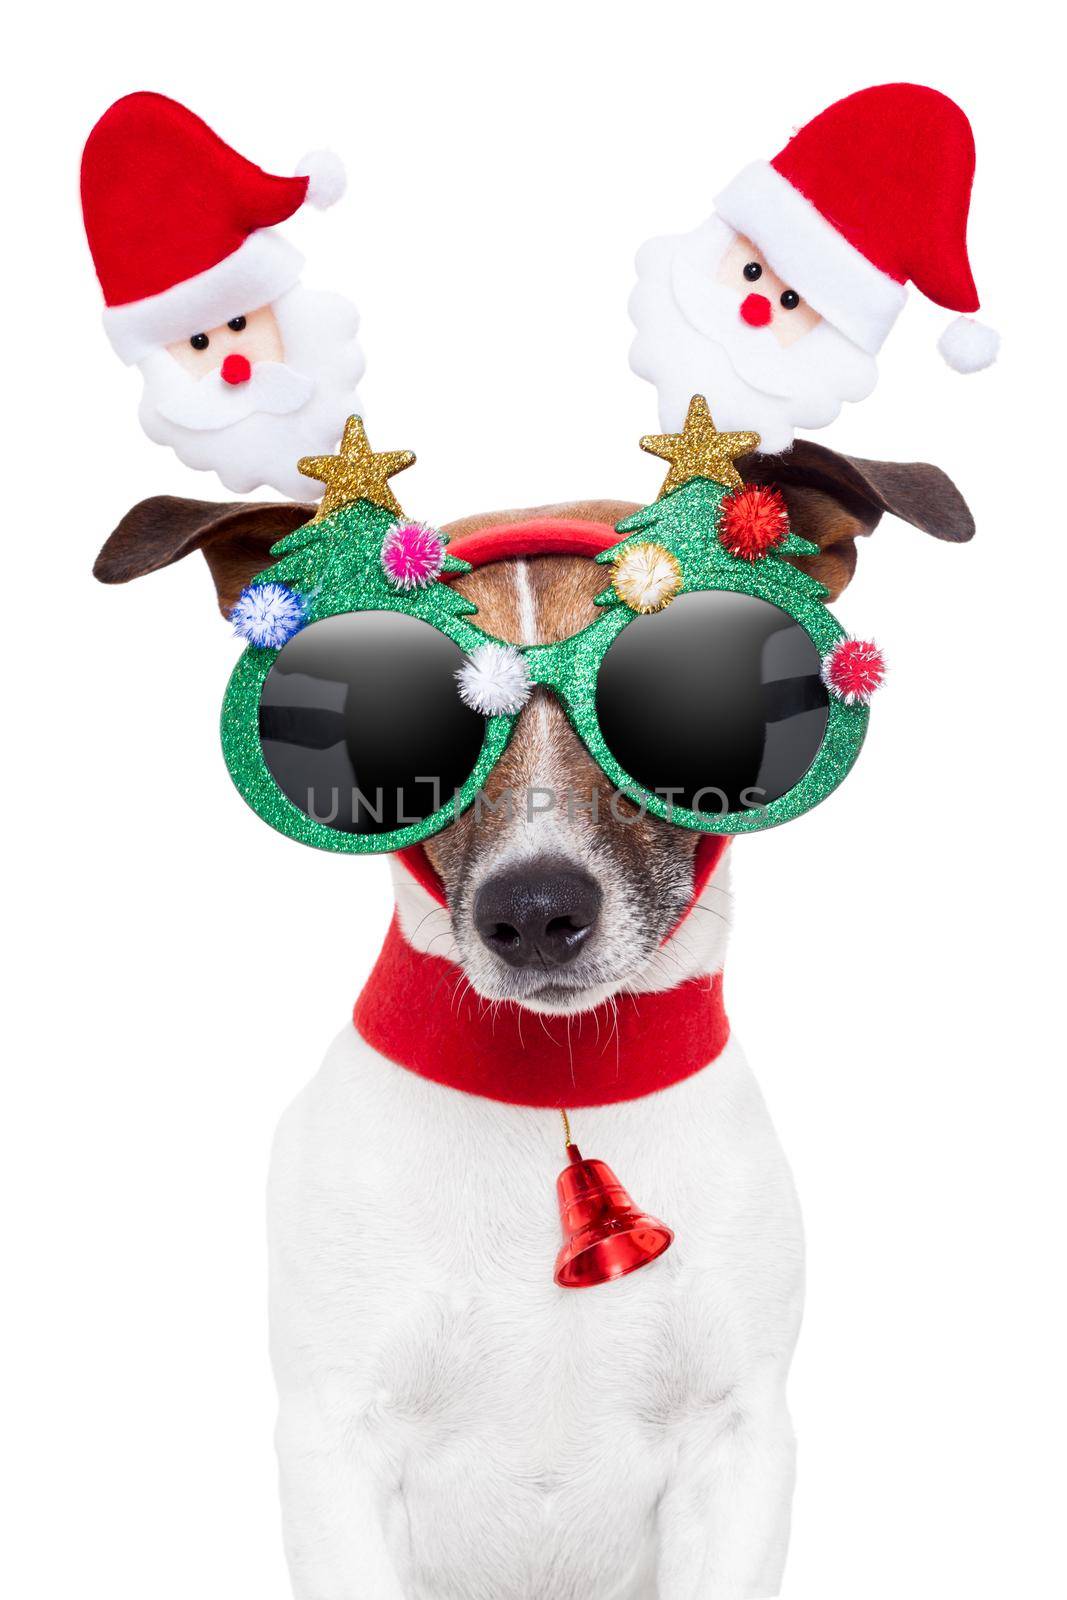 xmas dog with funny sunglasses